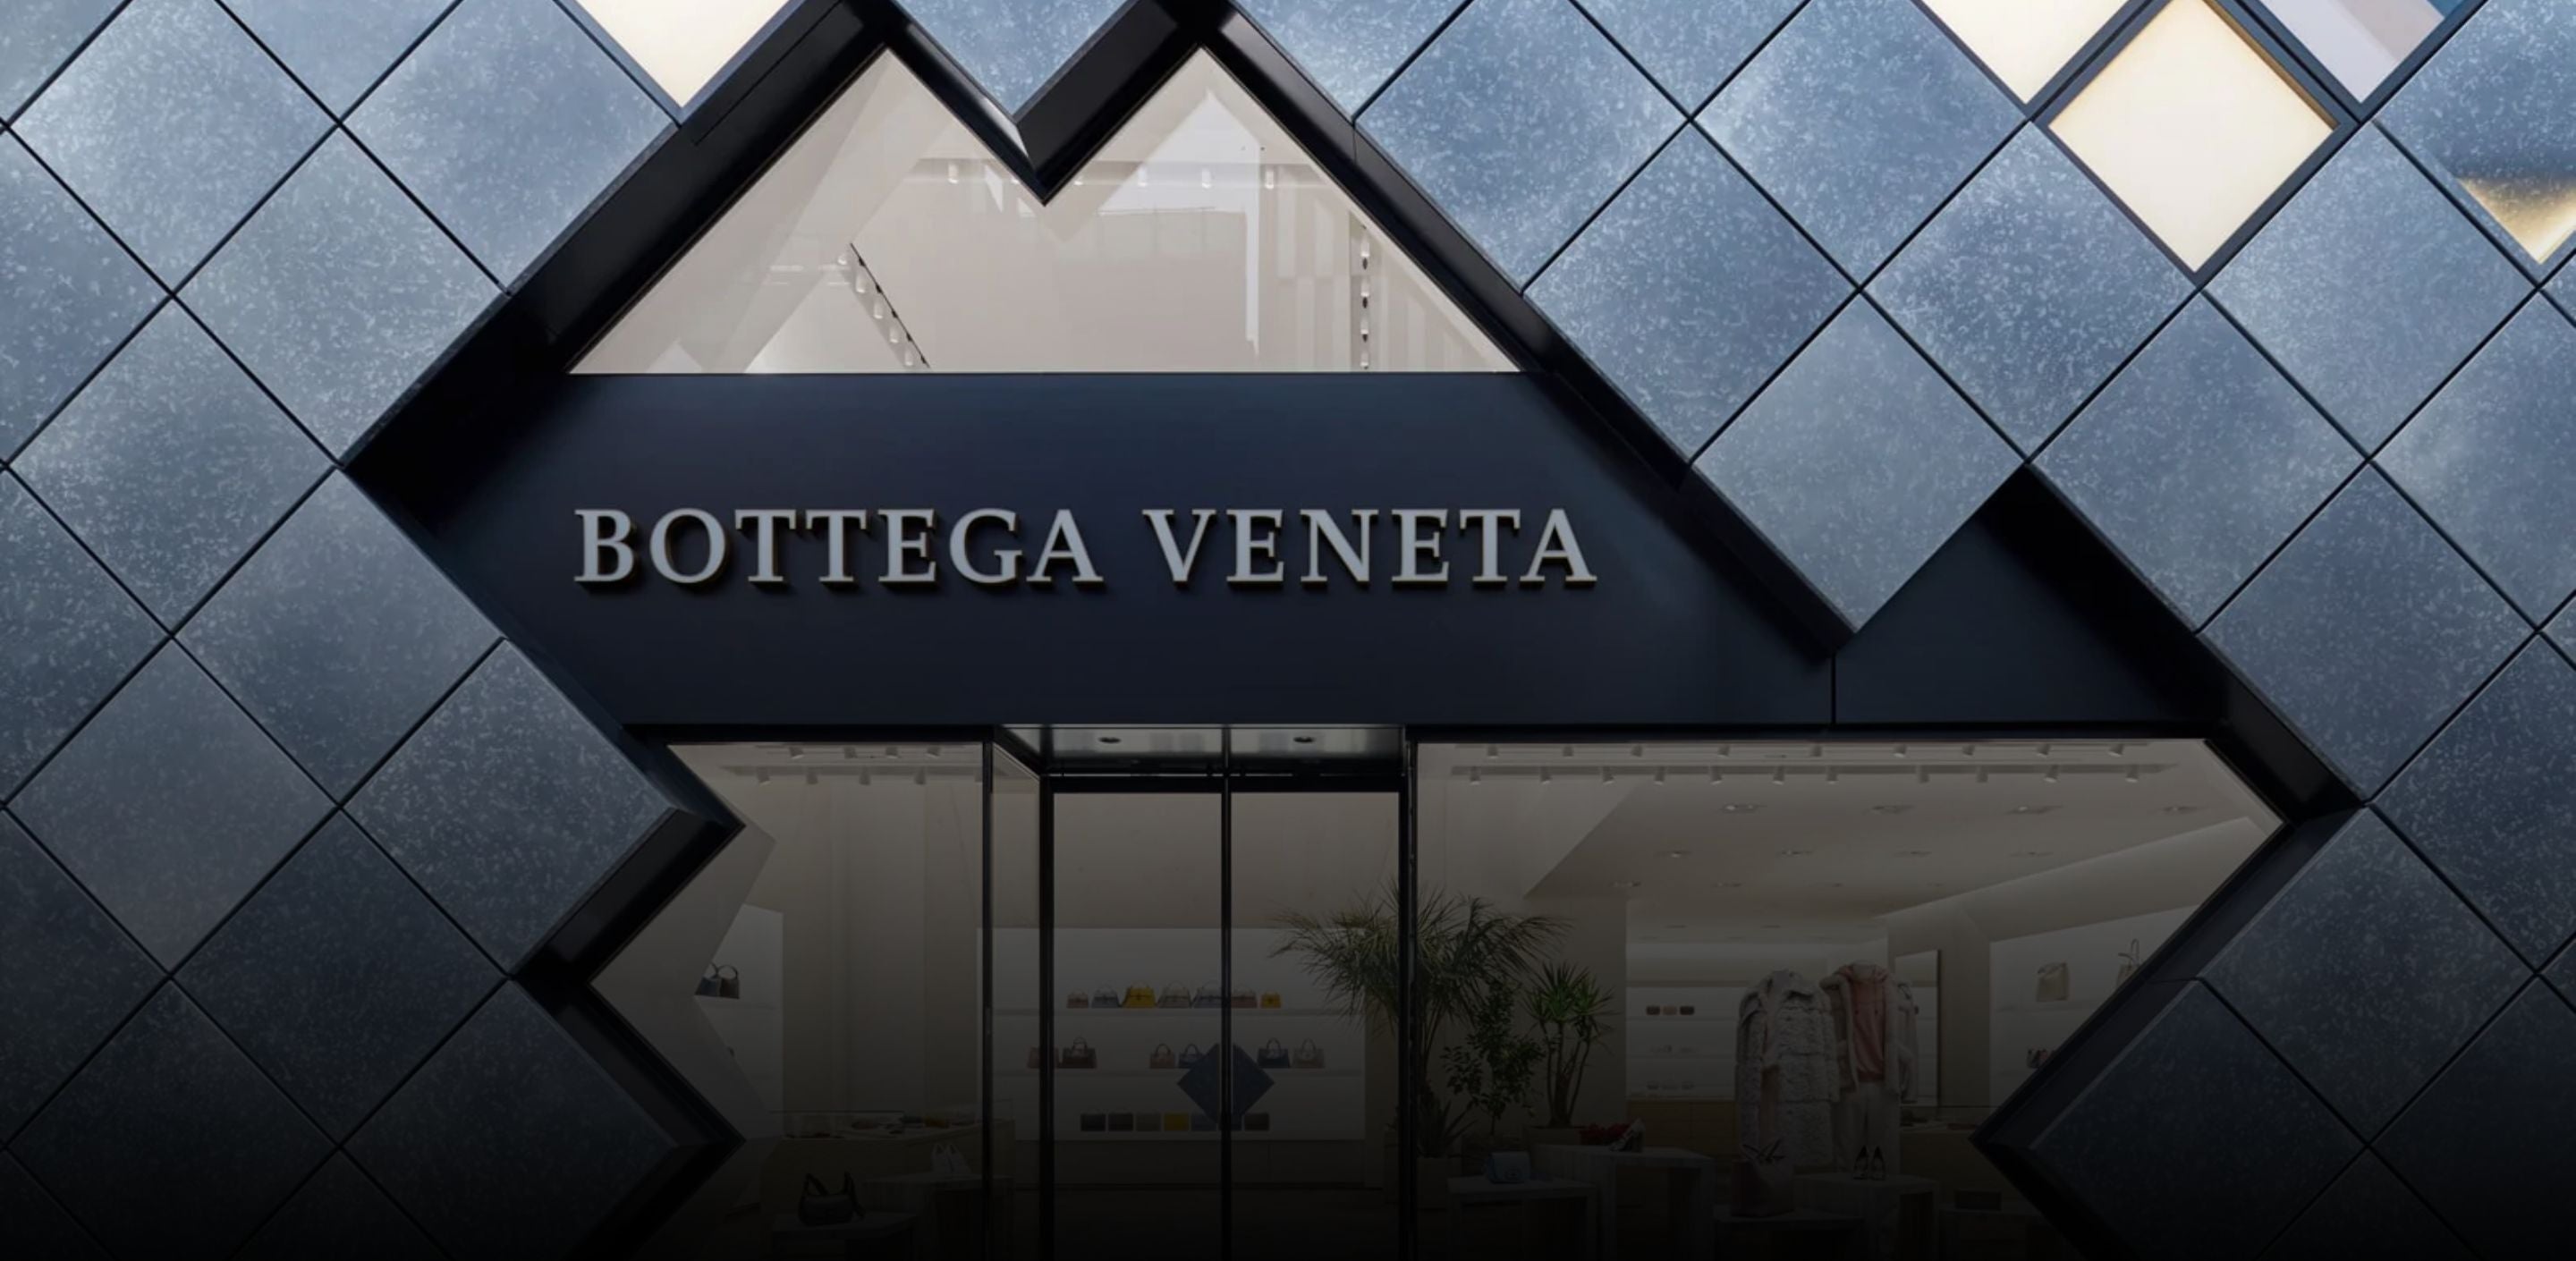 Bottega Veneta A Luxury Fashion House